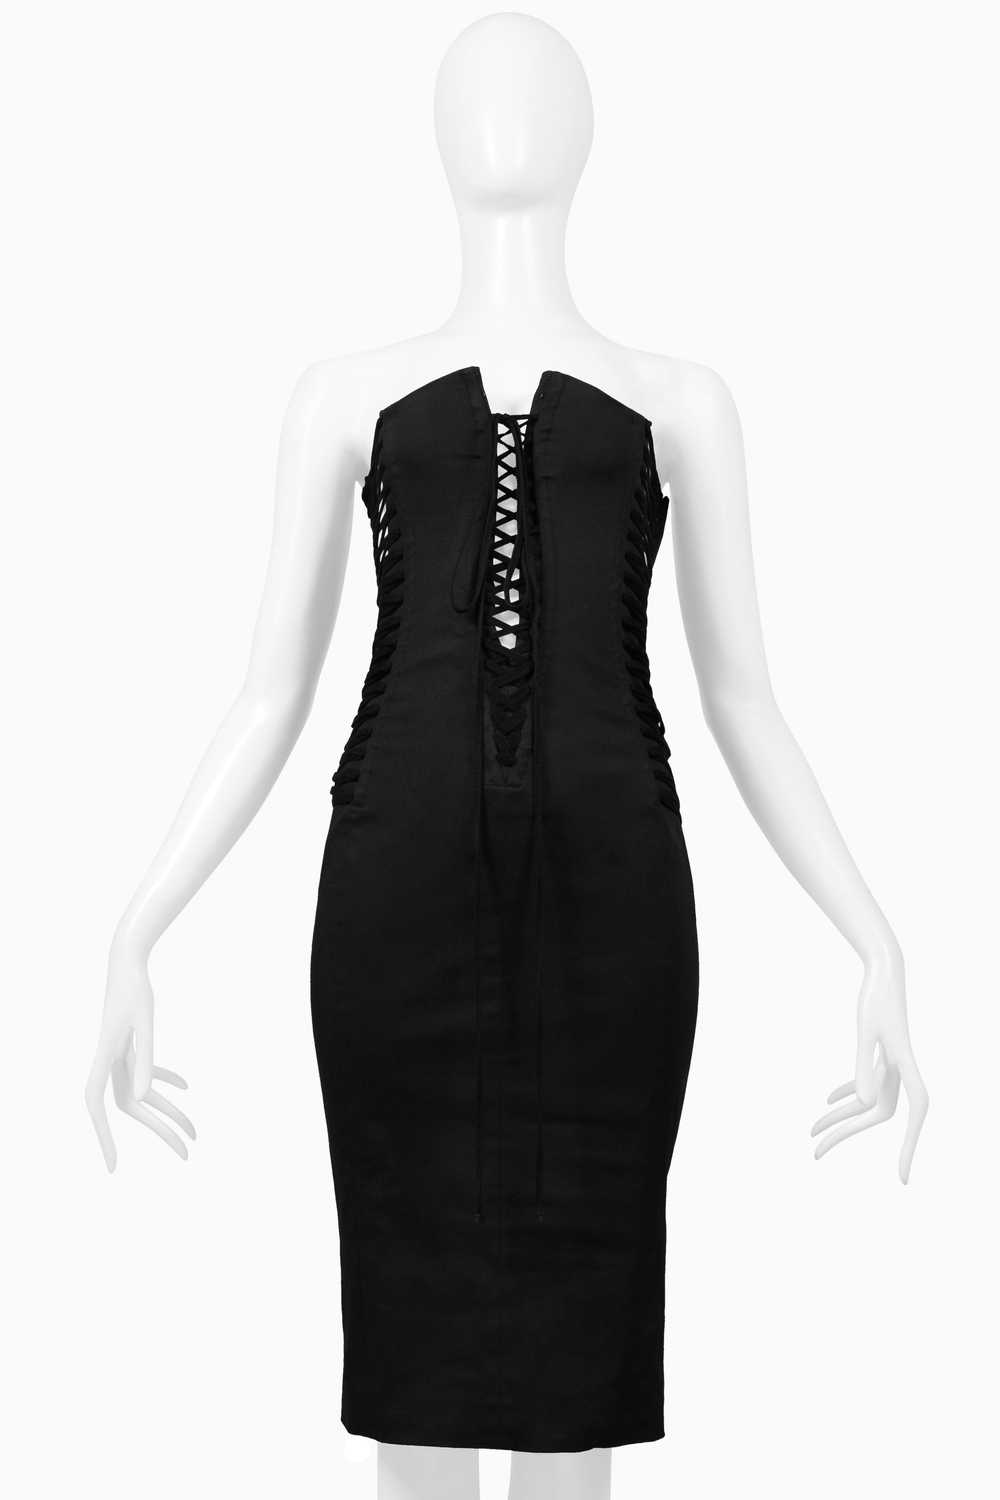 DOLCE & GABBANA BLACK STRAPLESS CORSET DRESS 2002 - image 4